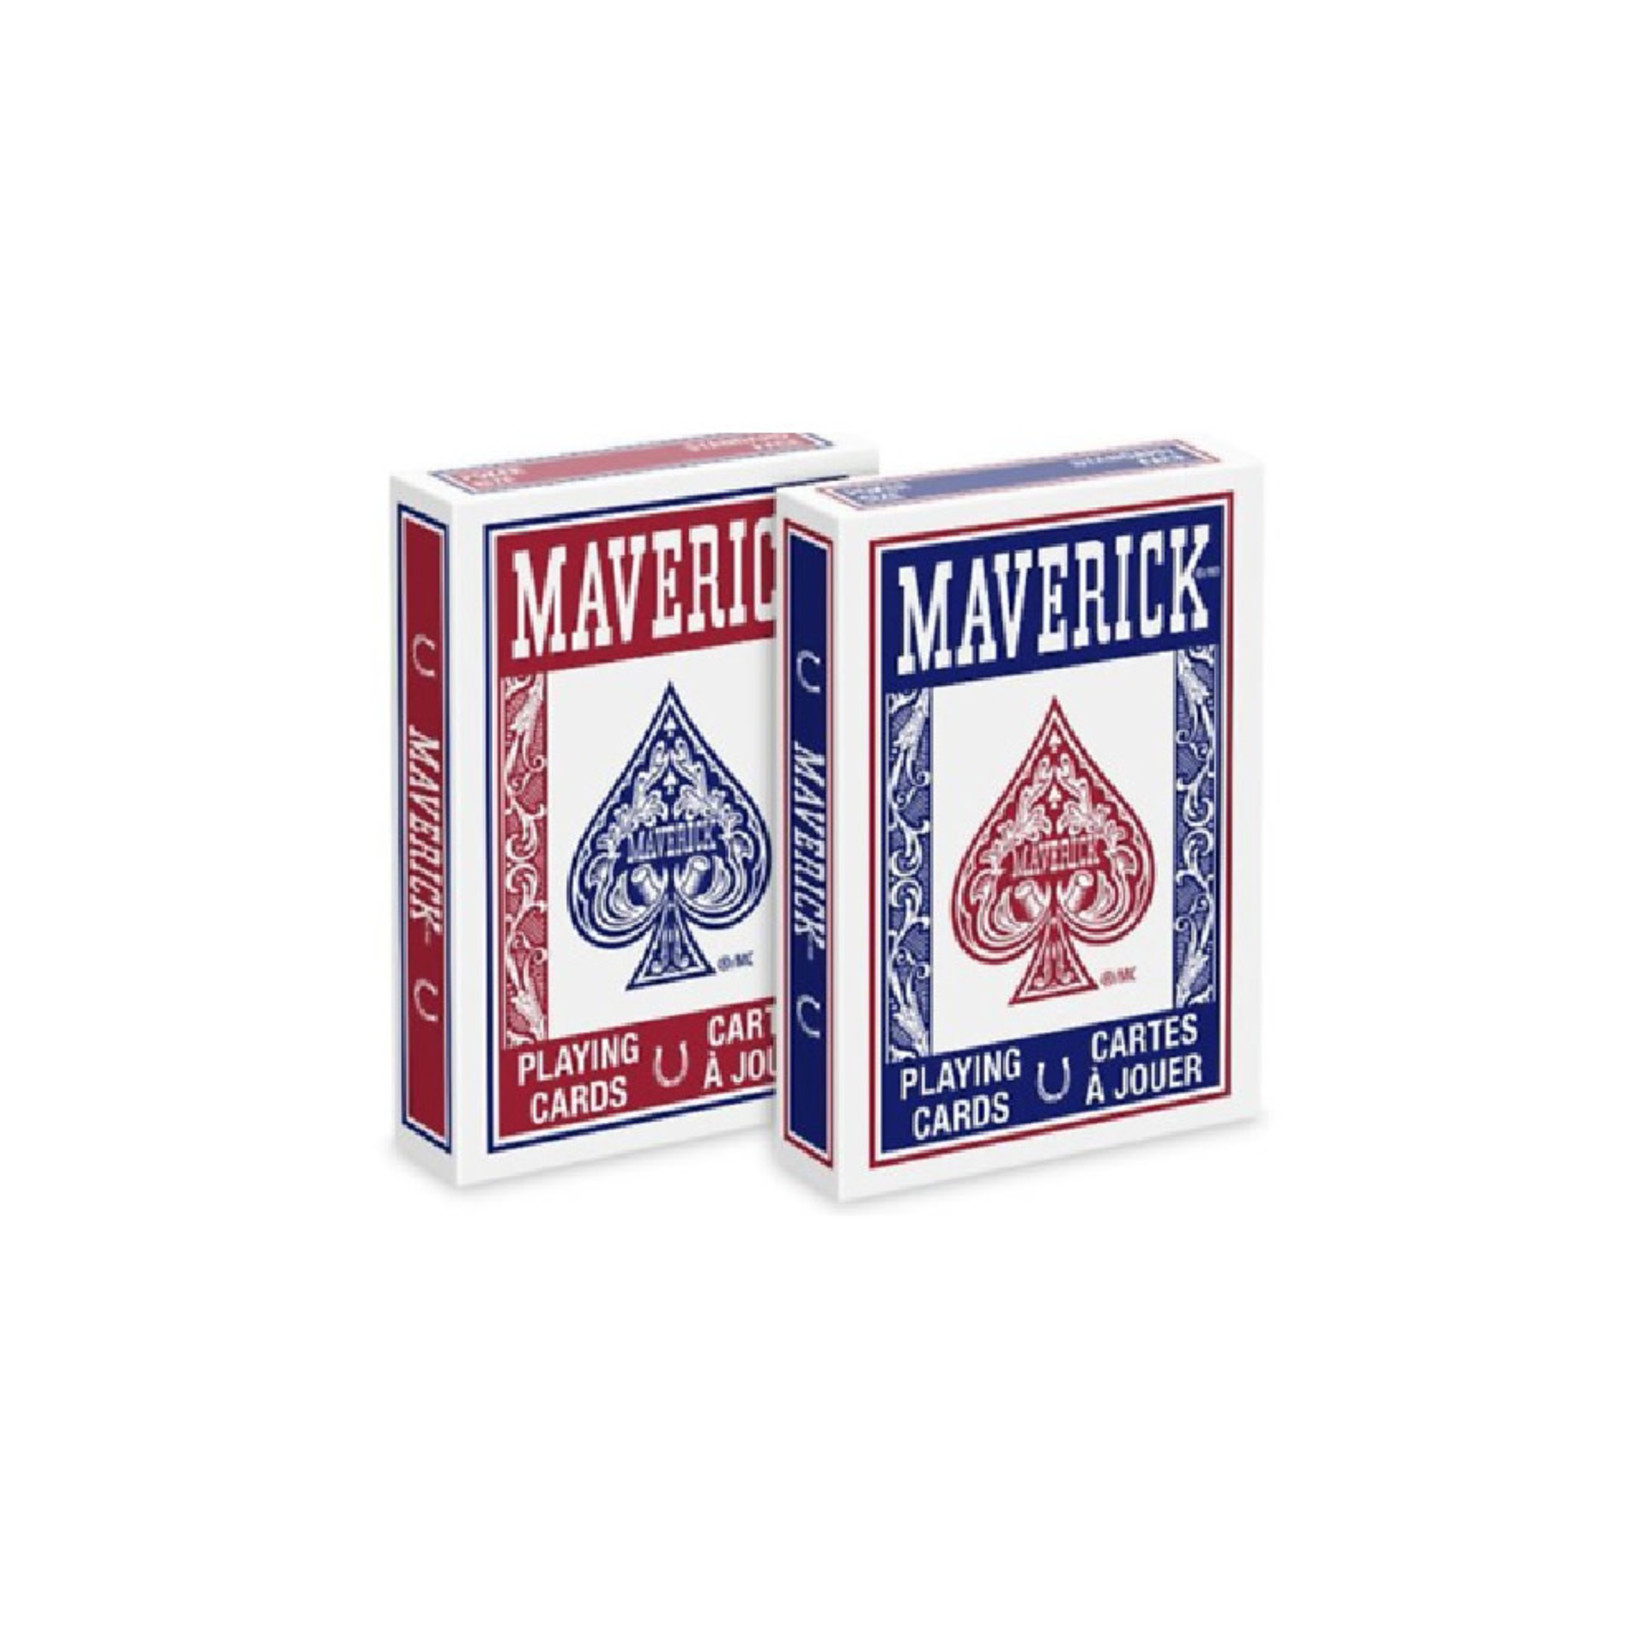 Bicycle Bicycle - Maverick Standard Playing Cards (1 Unit)